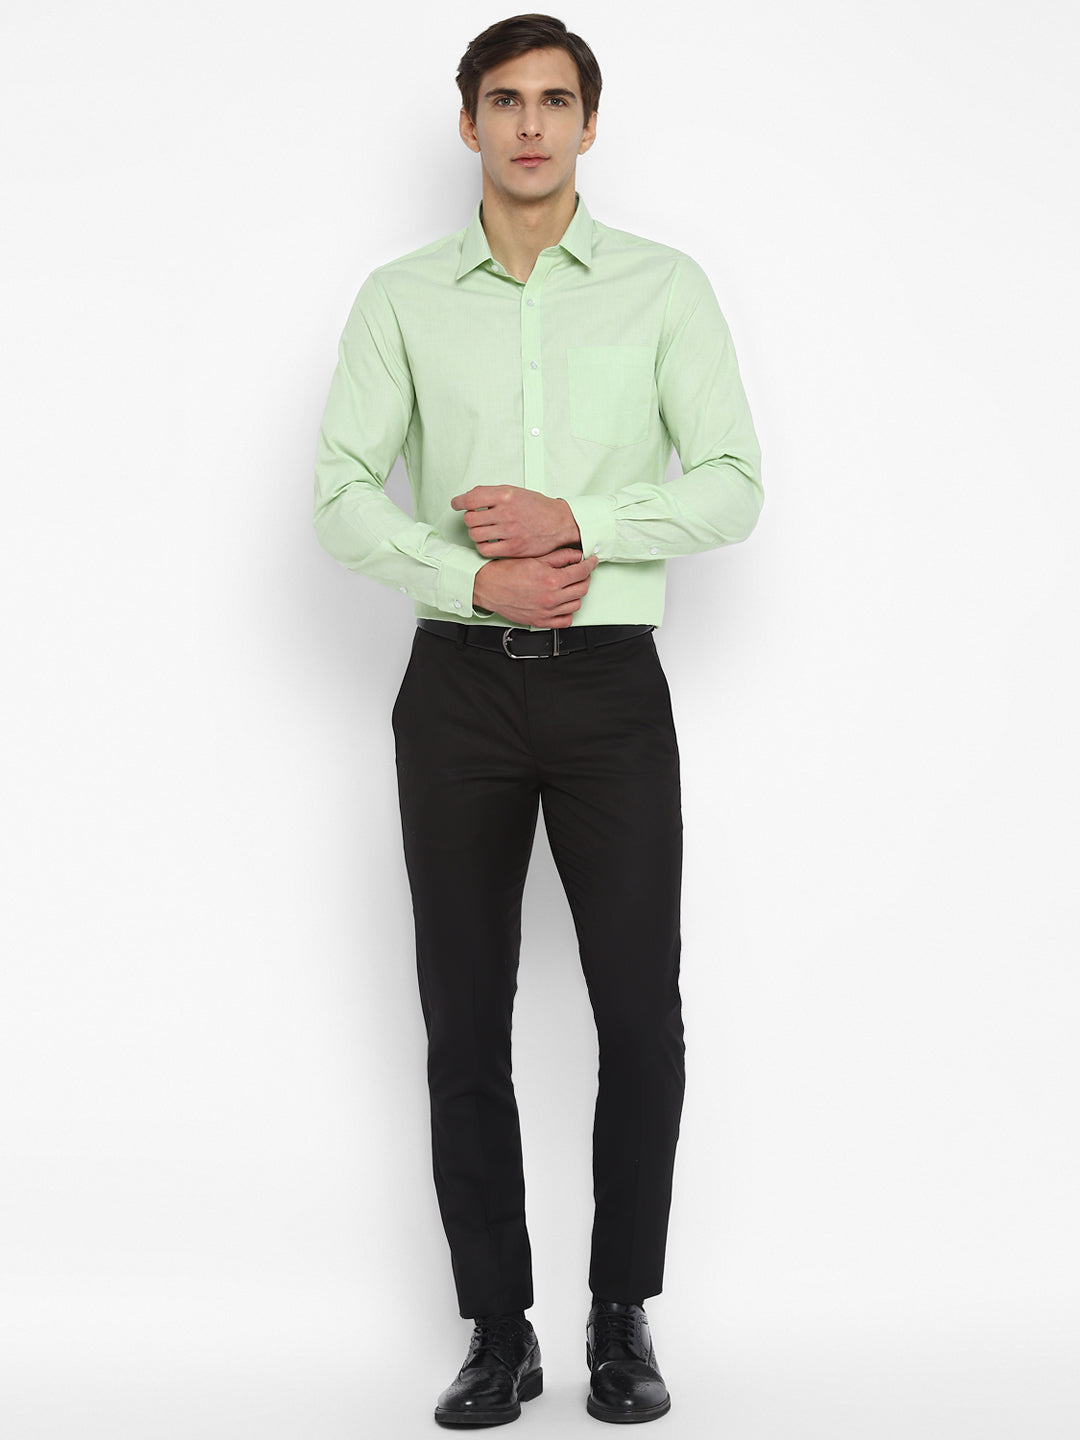 Cotton Light Green Solid Slim Fit Shirt